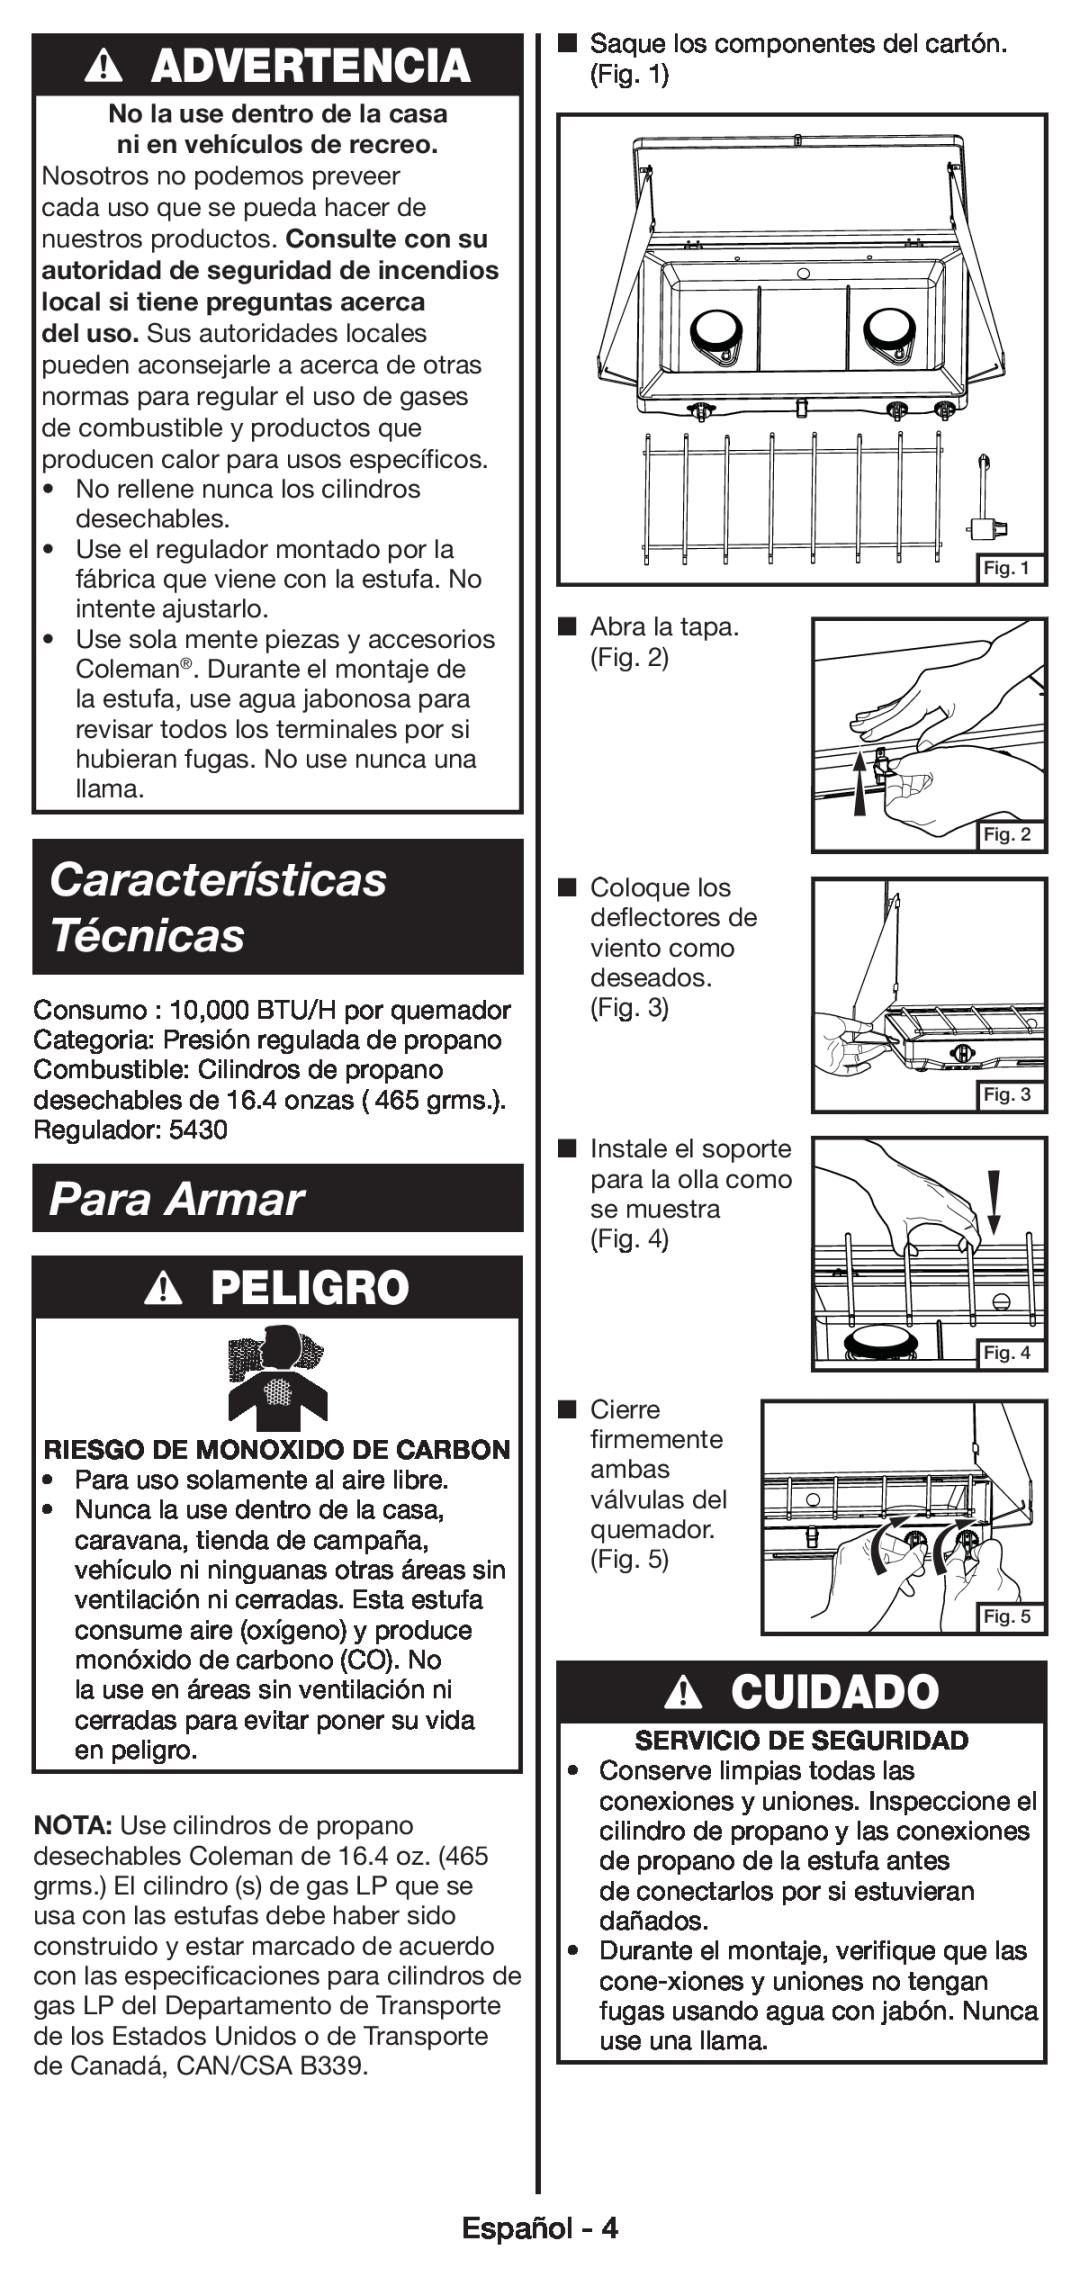 Coleman 5430E Características Técnicas, Para Armar, Advertencia, Peligro, Cuidado, Español, Riesgo De Monoxido De Carbon 